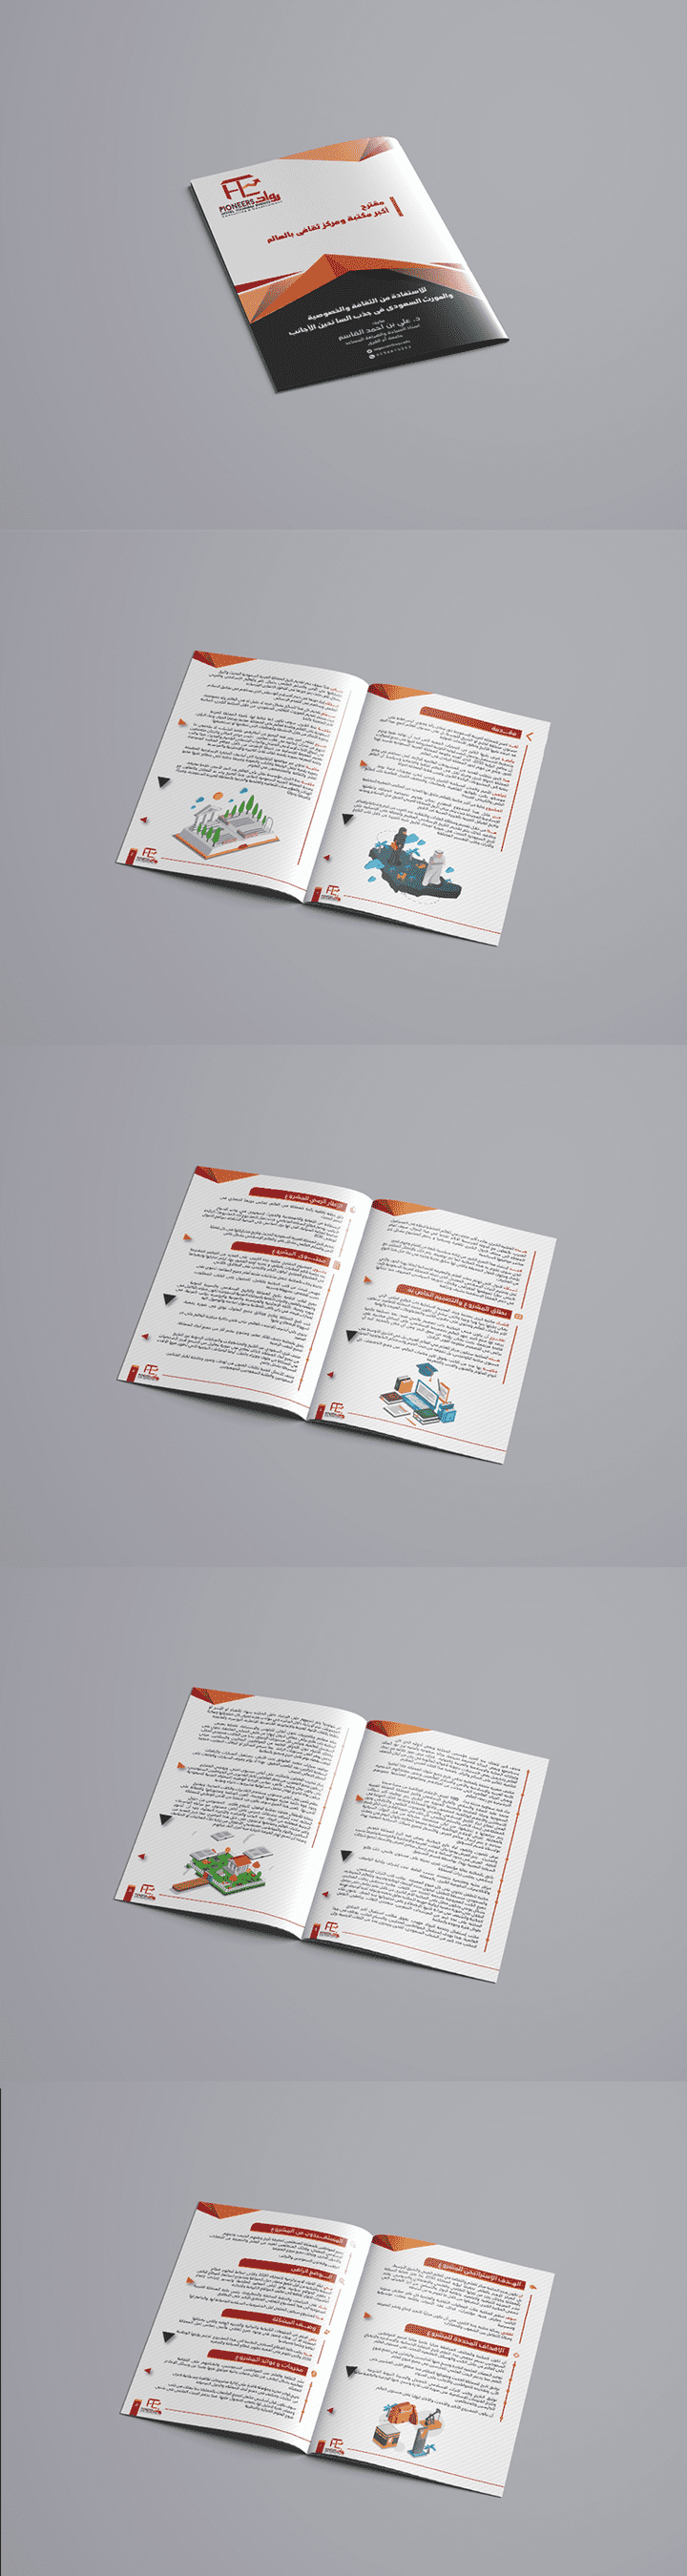 Booklet Design A4